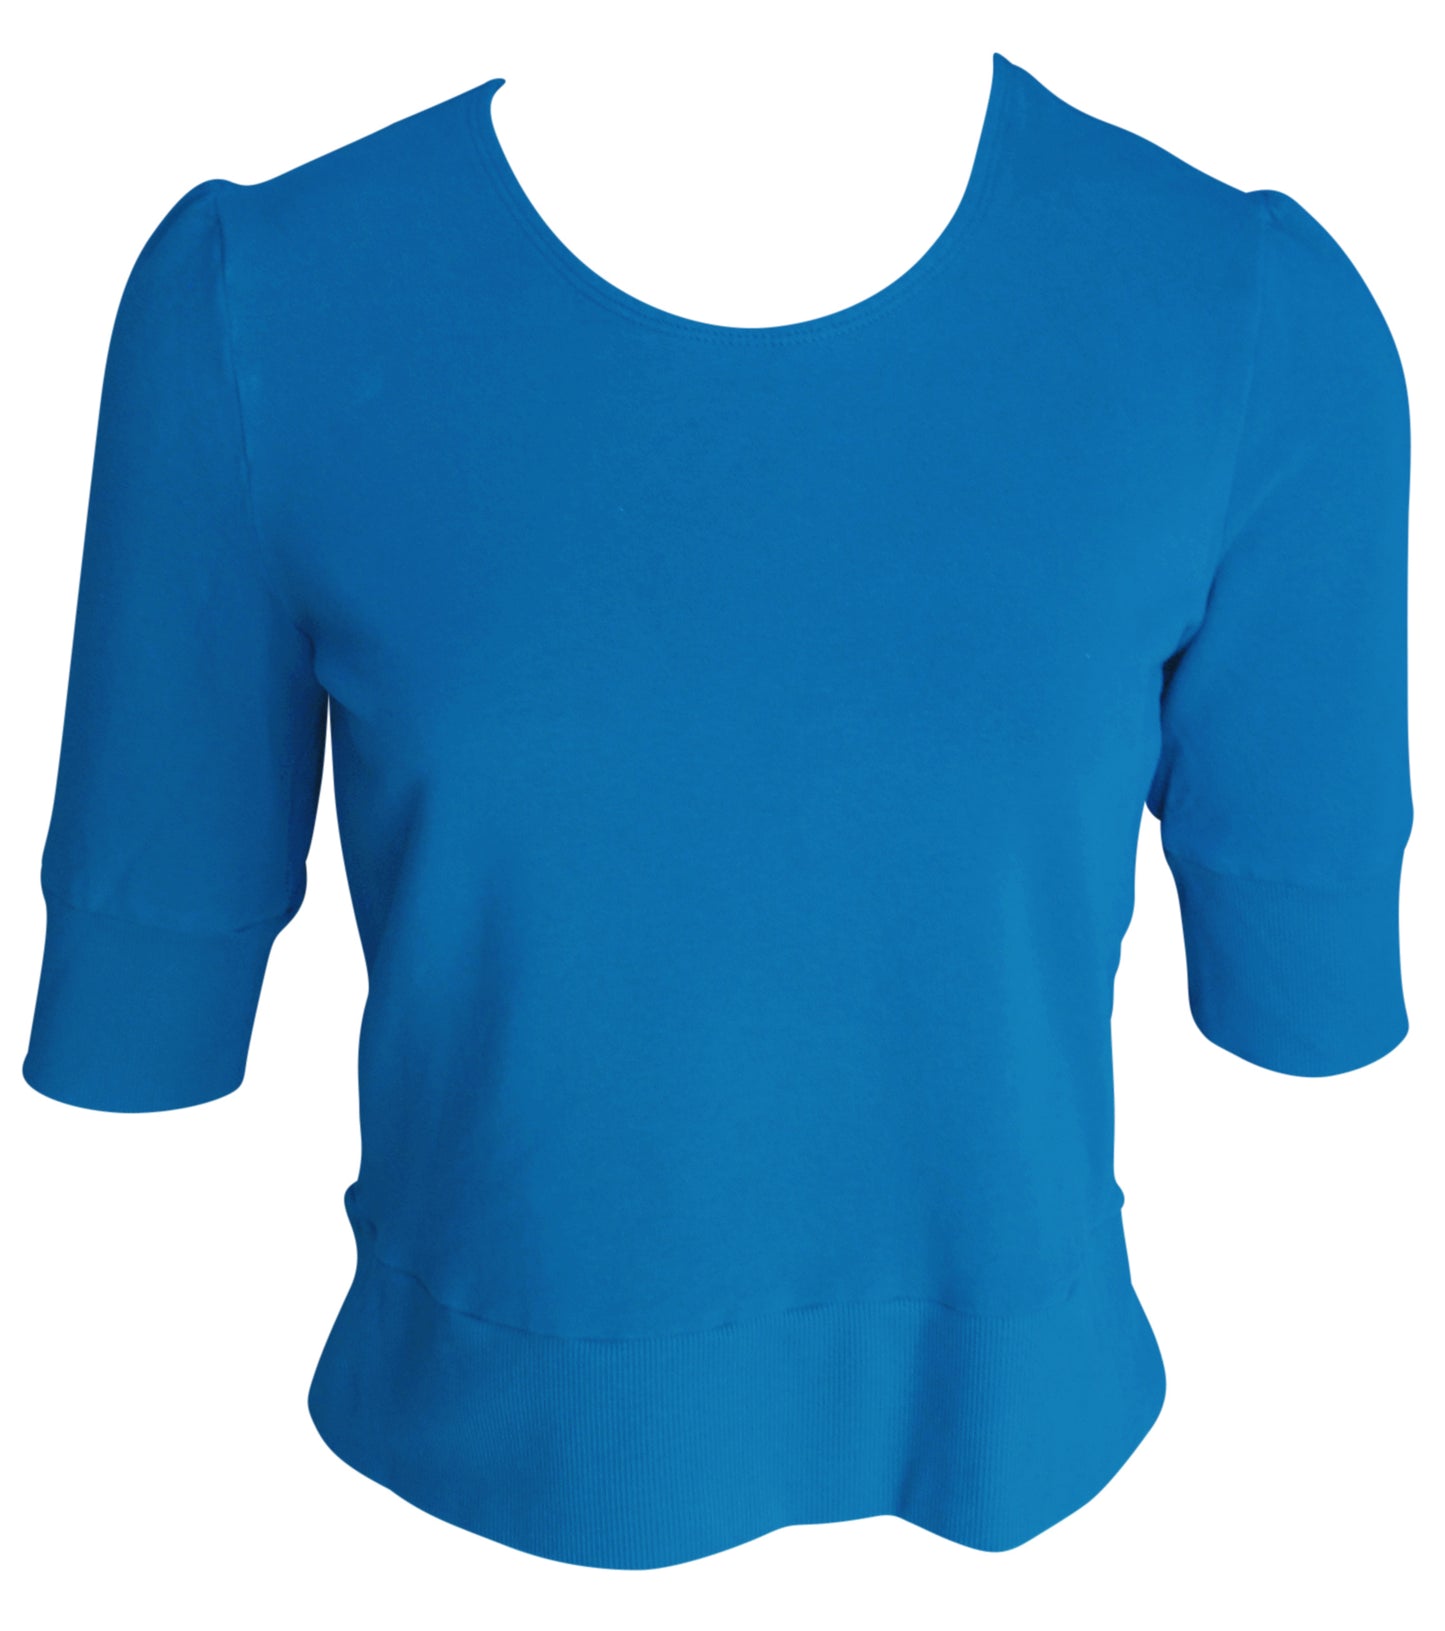 France Light Blue Cropped T-Shirt